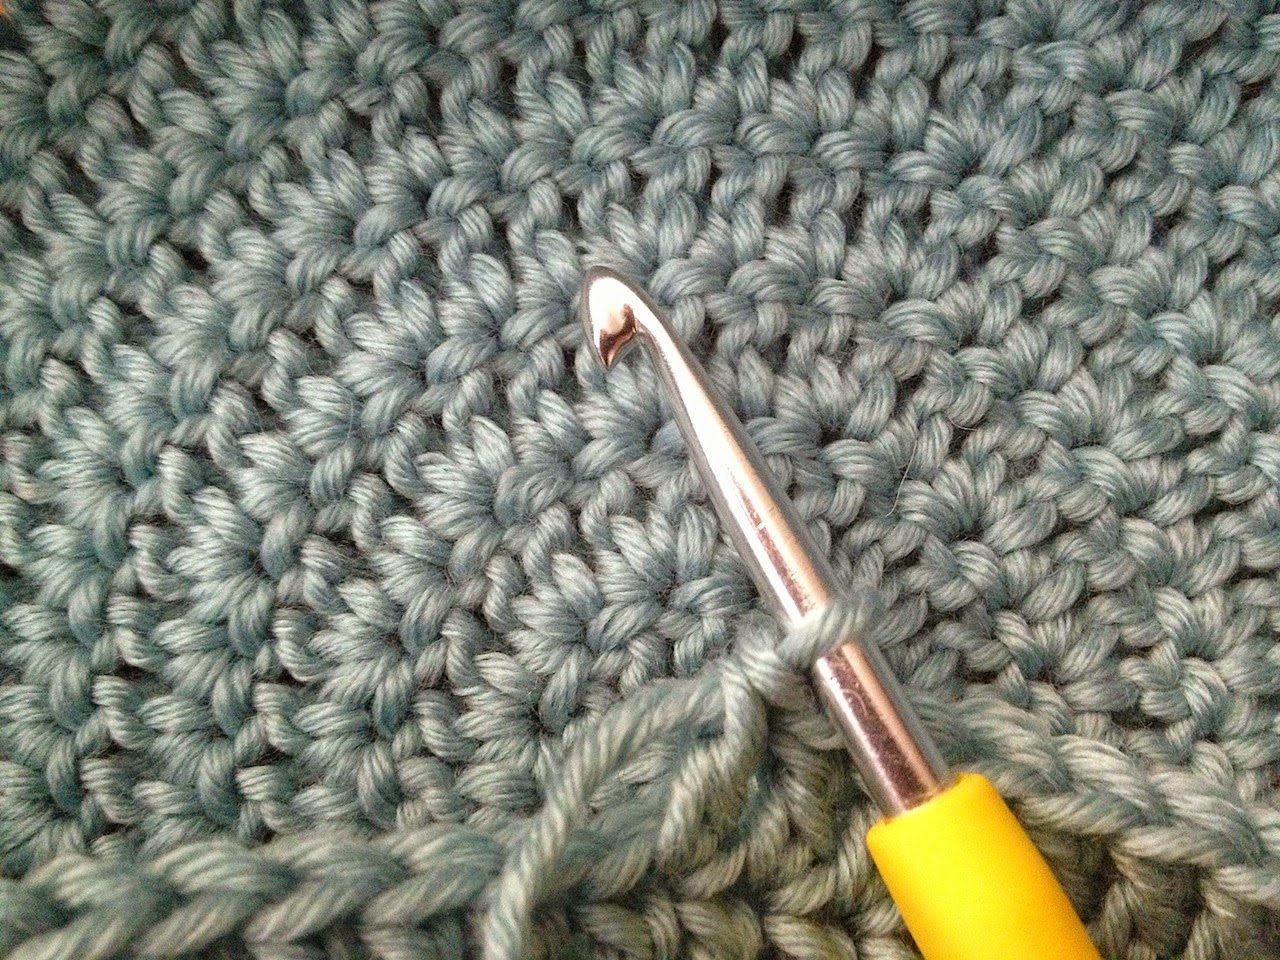 Knitter's Pride Waves Crochet Hook Set